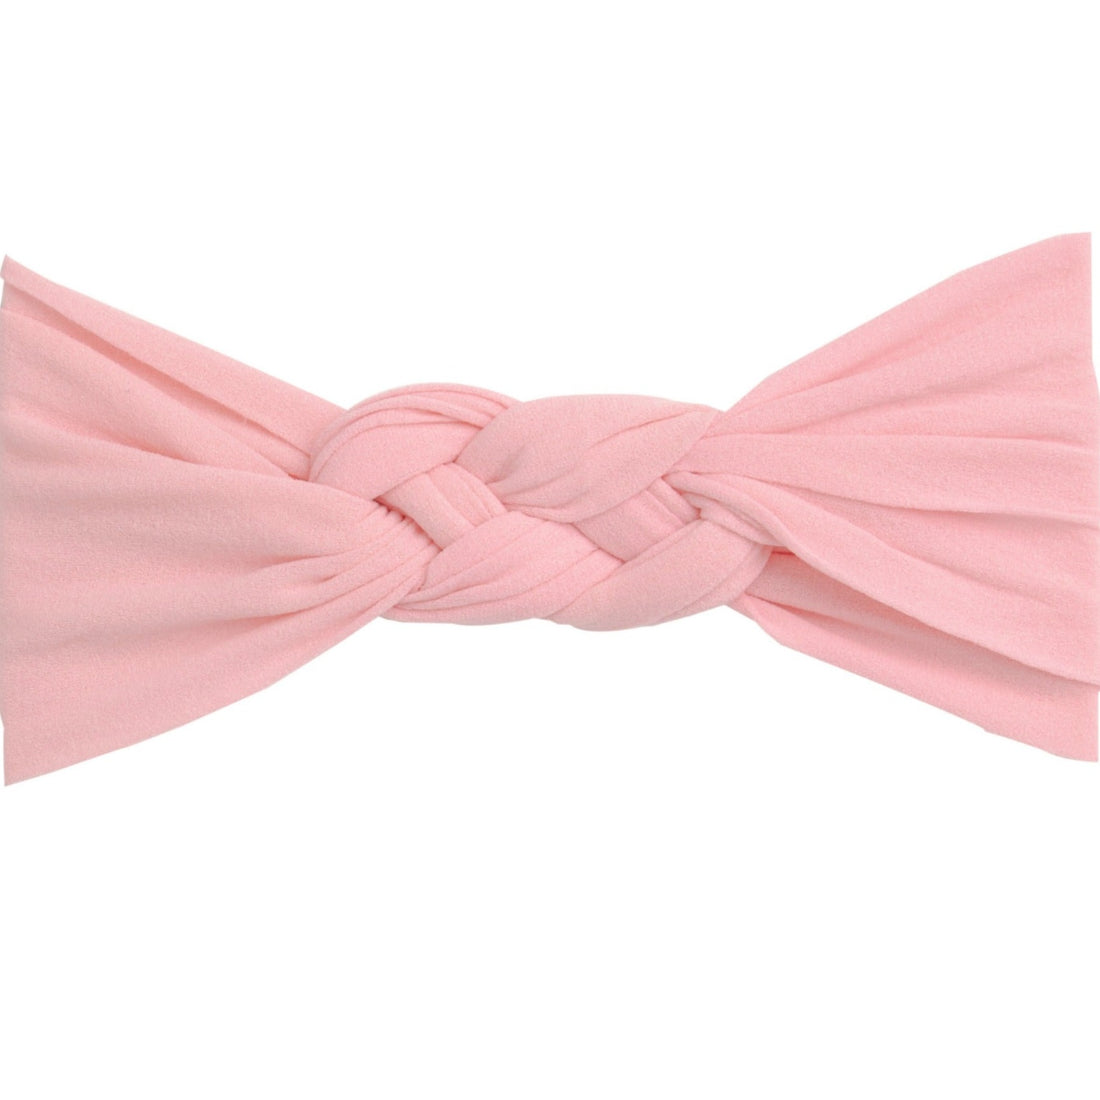 Sailor Knot Nylon Headwrap - Blush Pink